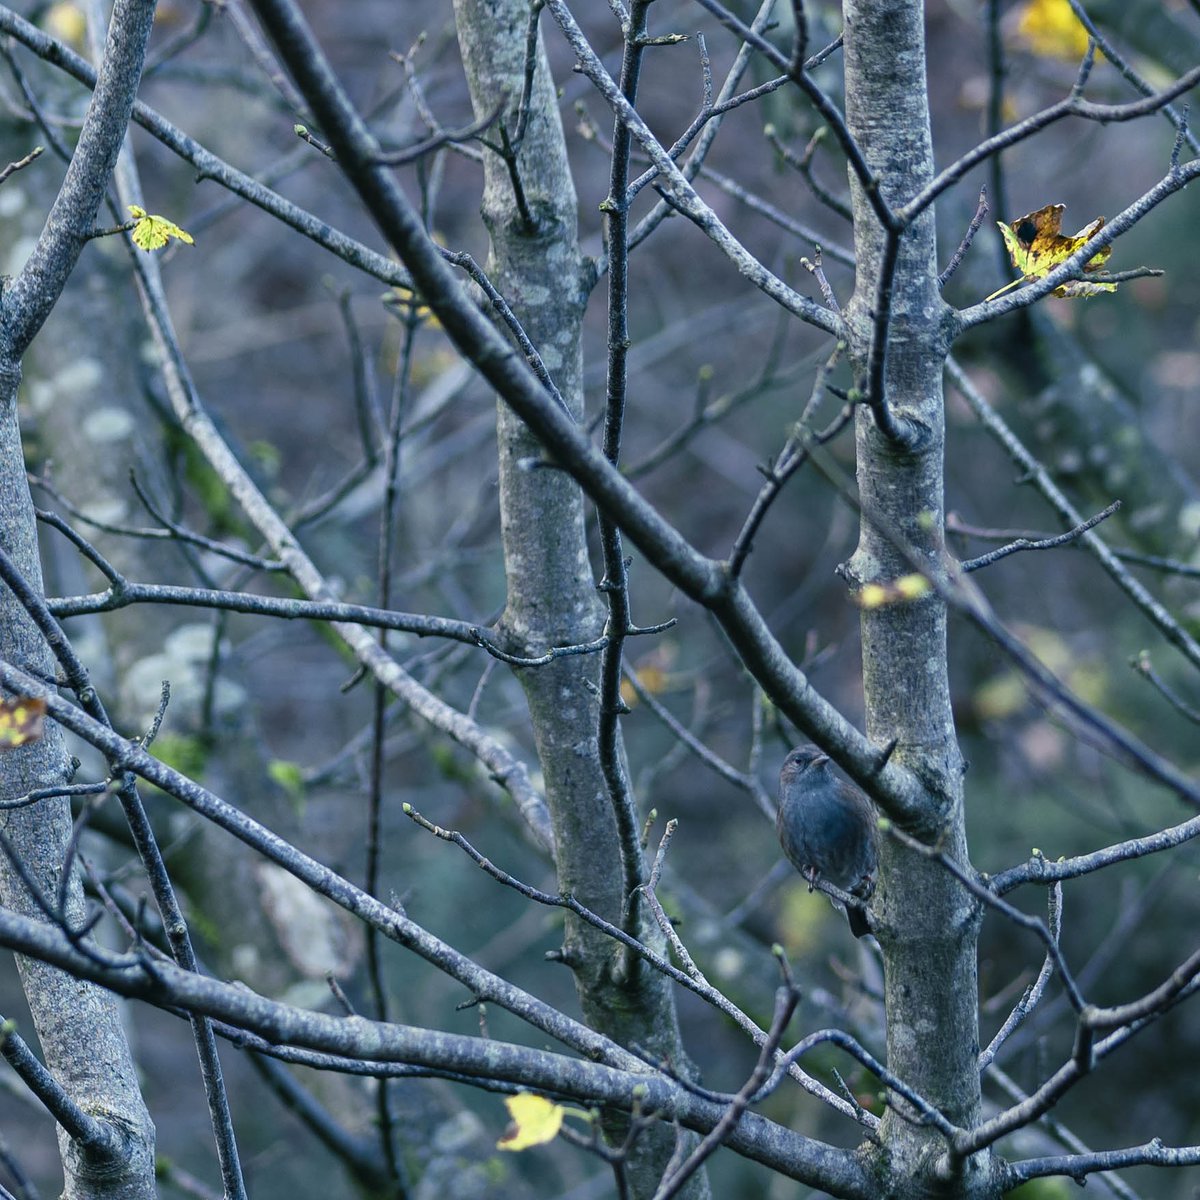 #photography #naturephotography #Landscape #birds #wildbirds #wildbirdsphotography #britishbirds #nikonphotography #trees #treephotography #walks #countrysidephotography #ukphotography #Lancashire #England #relaxing #winterscoming #Autumn #britishcountryside #countrysidescenery